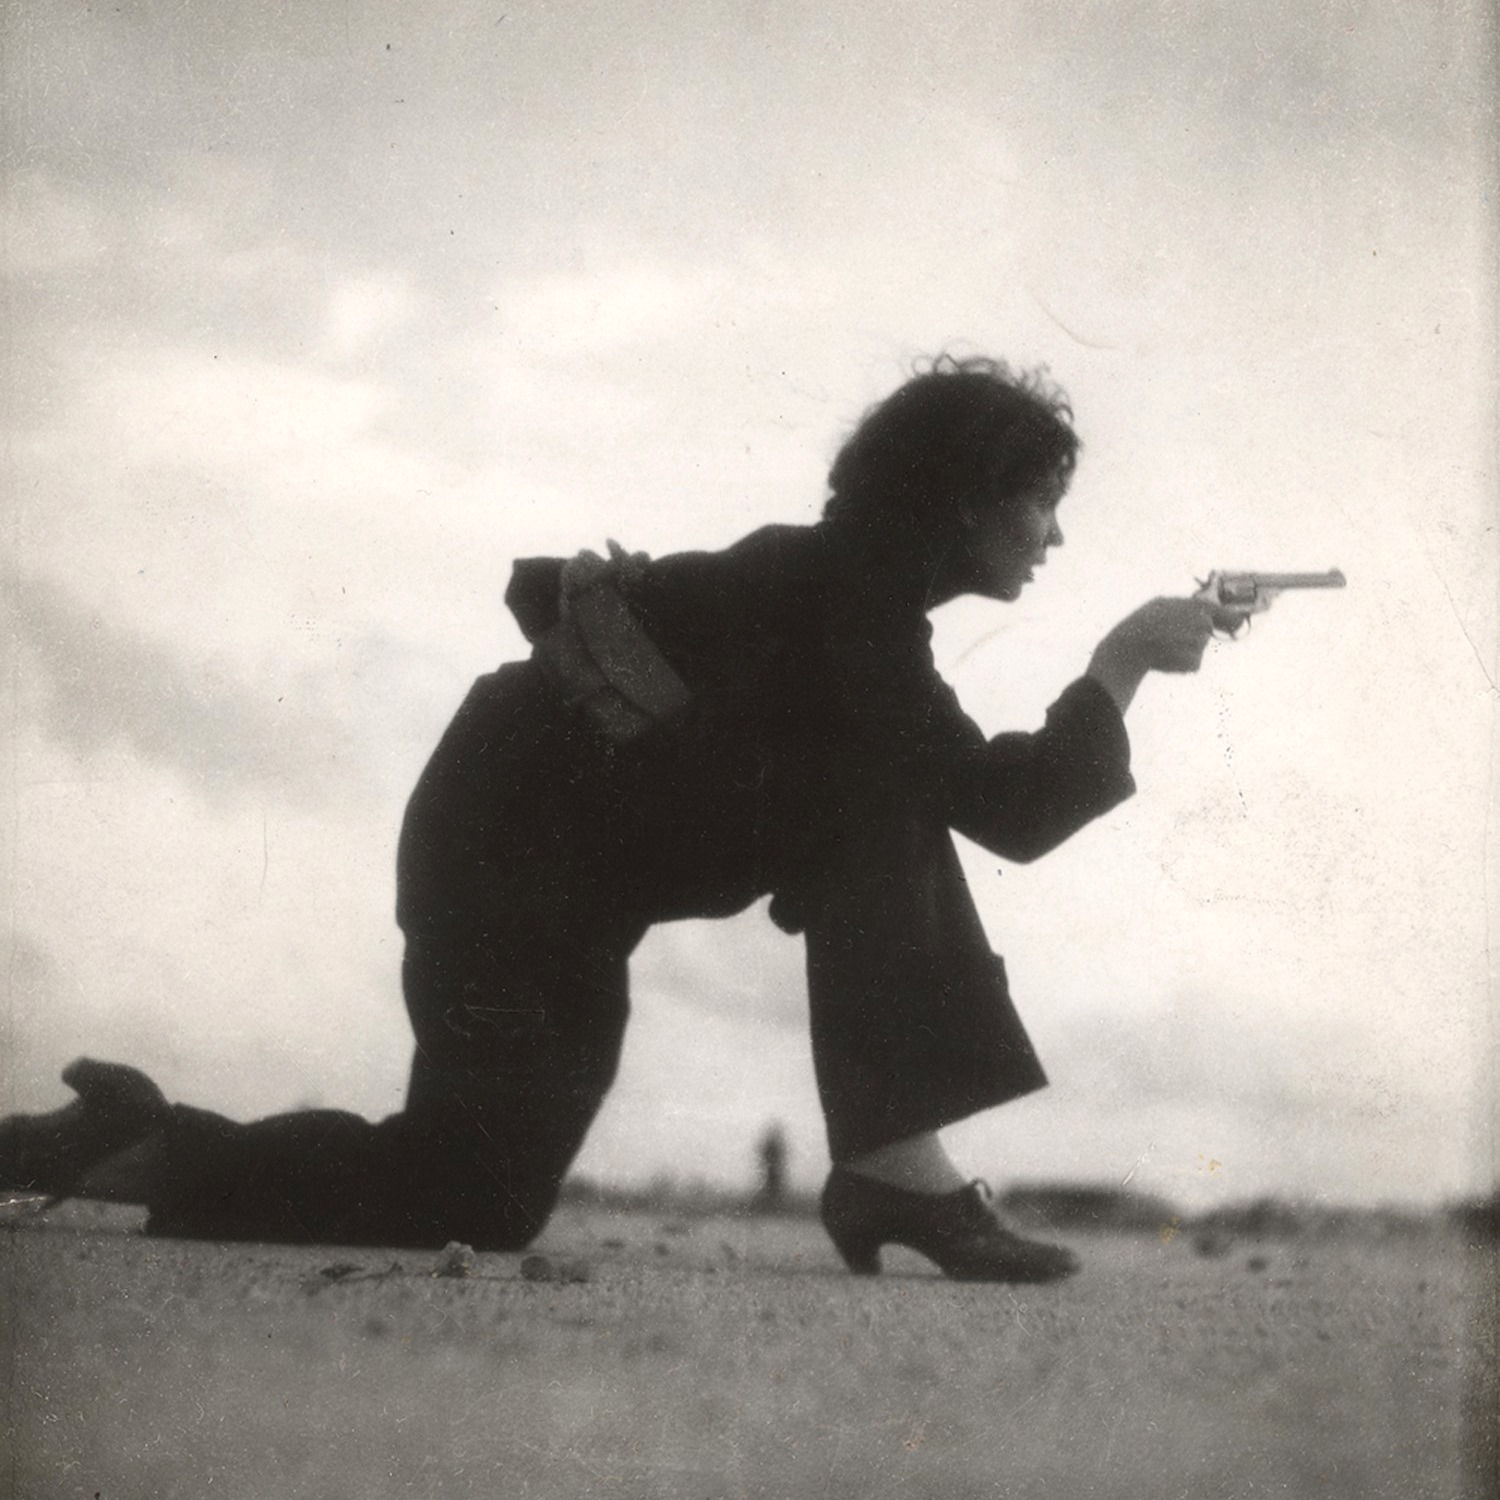 Gerda Taro’s photo of a militia member training on the beach outside Barcelona August 1936